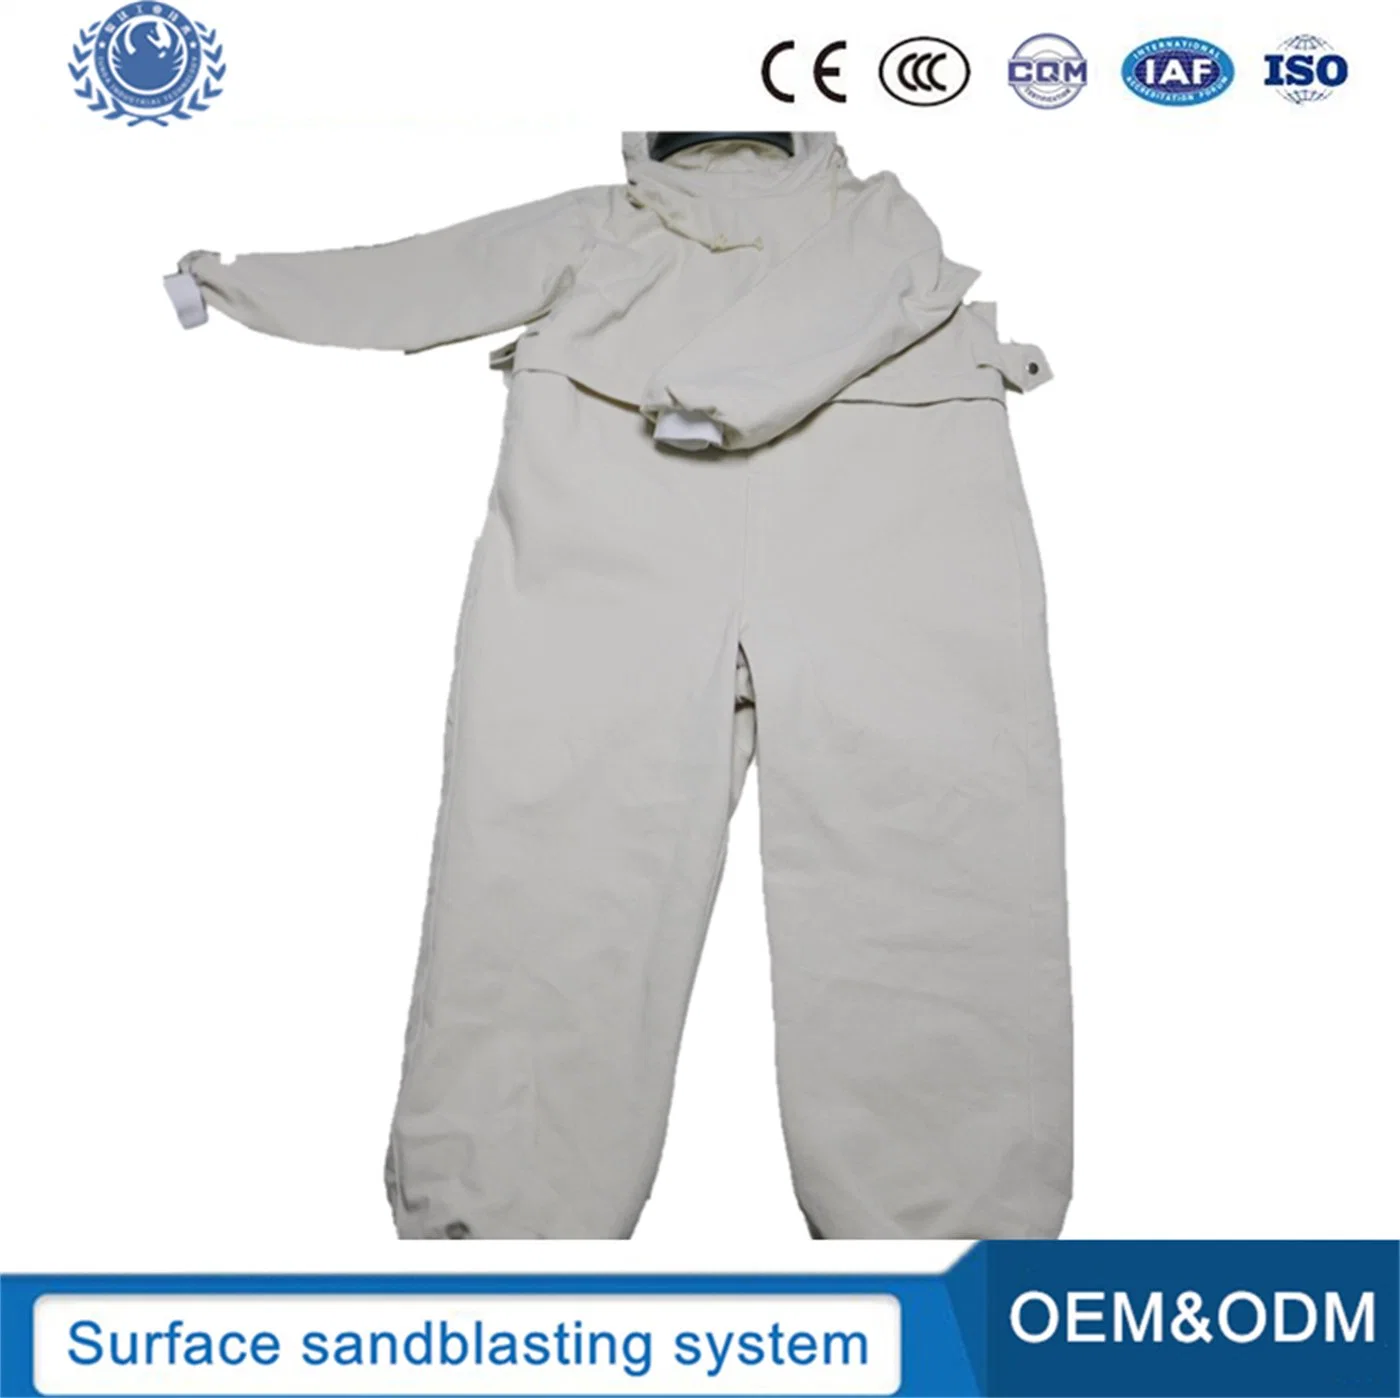 Wear-Resisting Canvas Sandblasting Suits for Blasting Abrasive